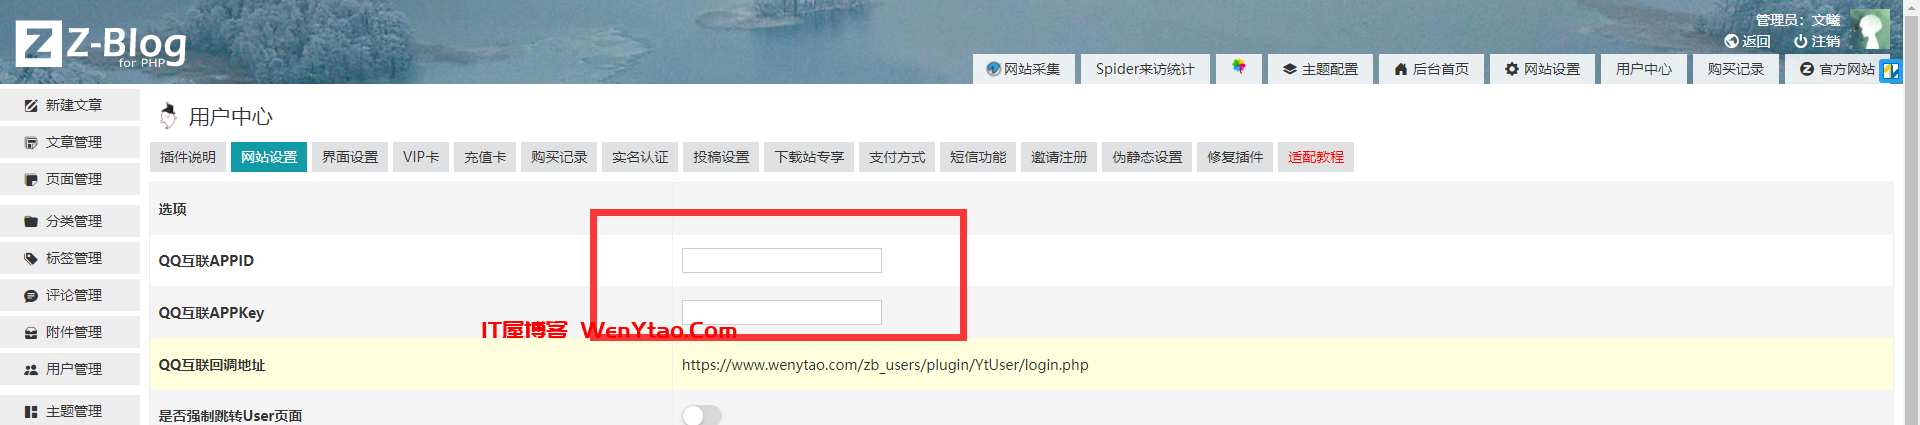 Z-Blog博客QQ 微信 支付宝 微博登录插件  博客 文件 测试 方法 地址 插件 第3张